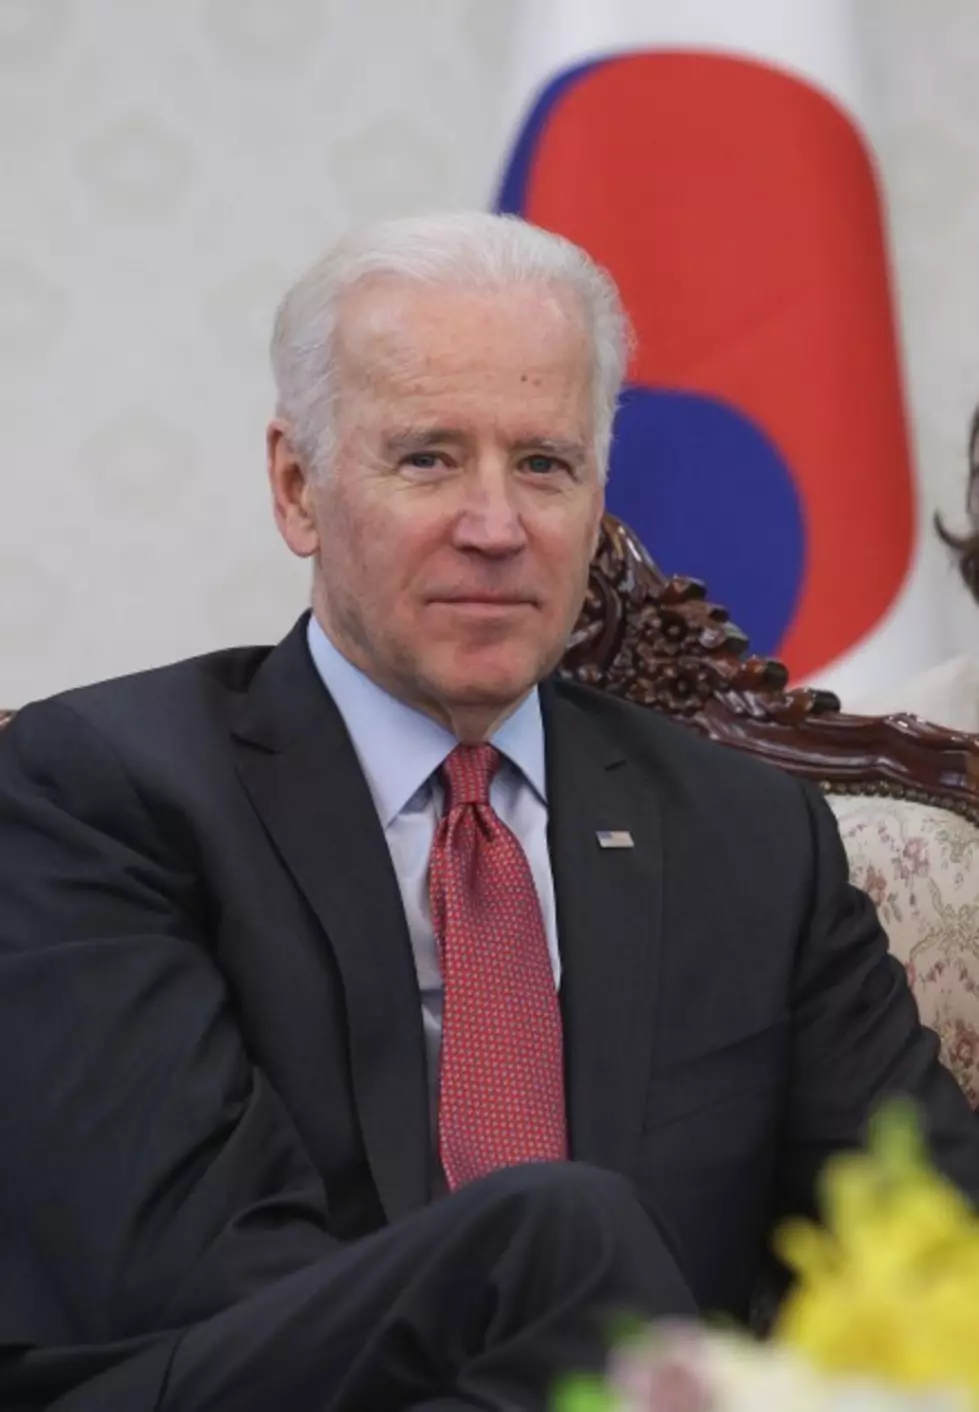 Joe Biden To Visit Central New York on Tuesday